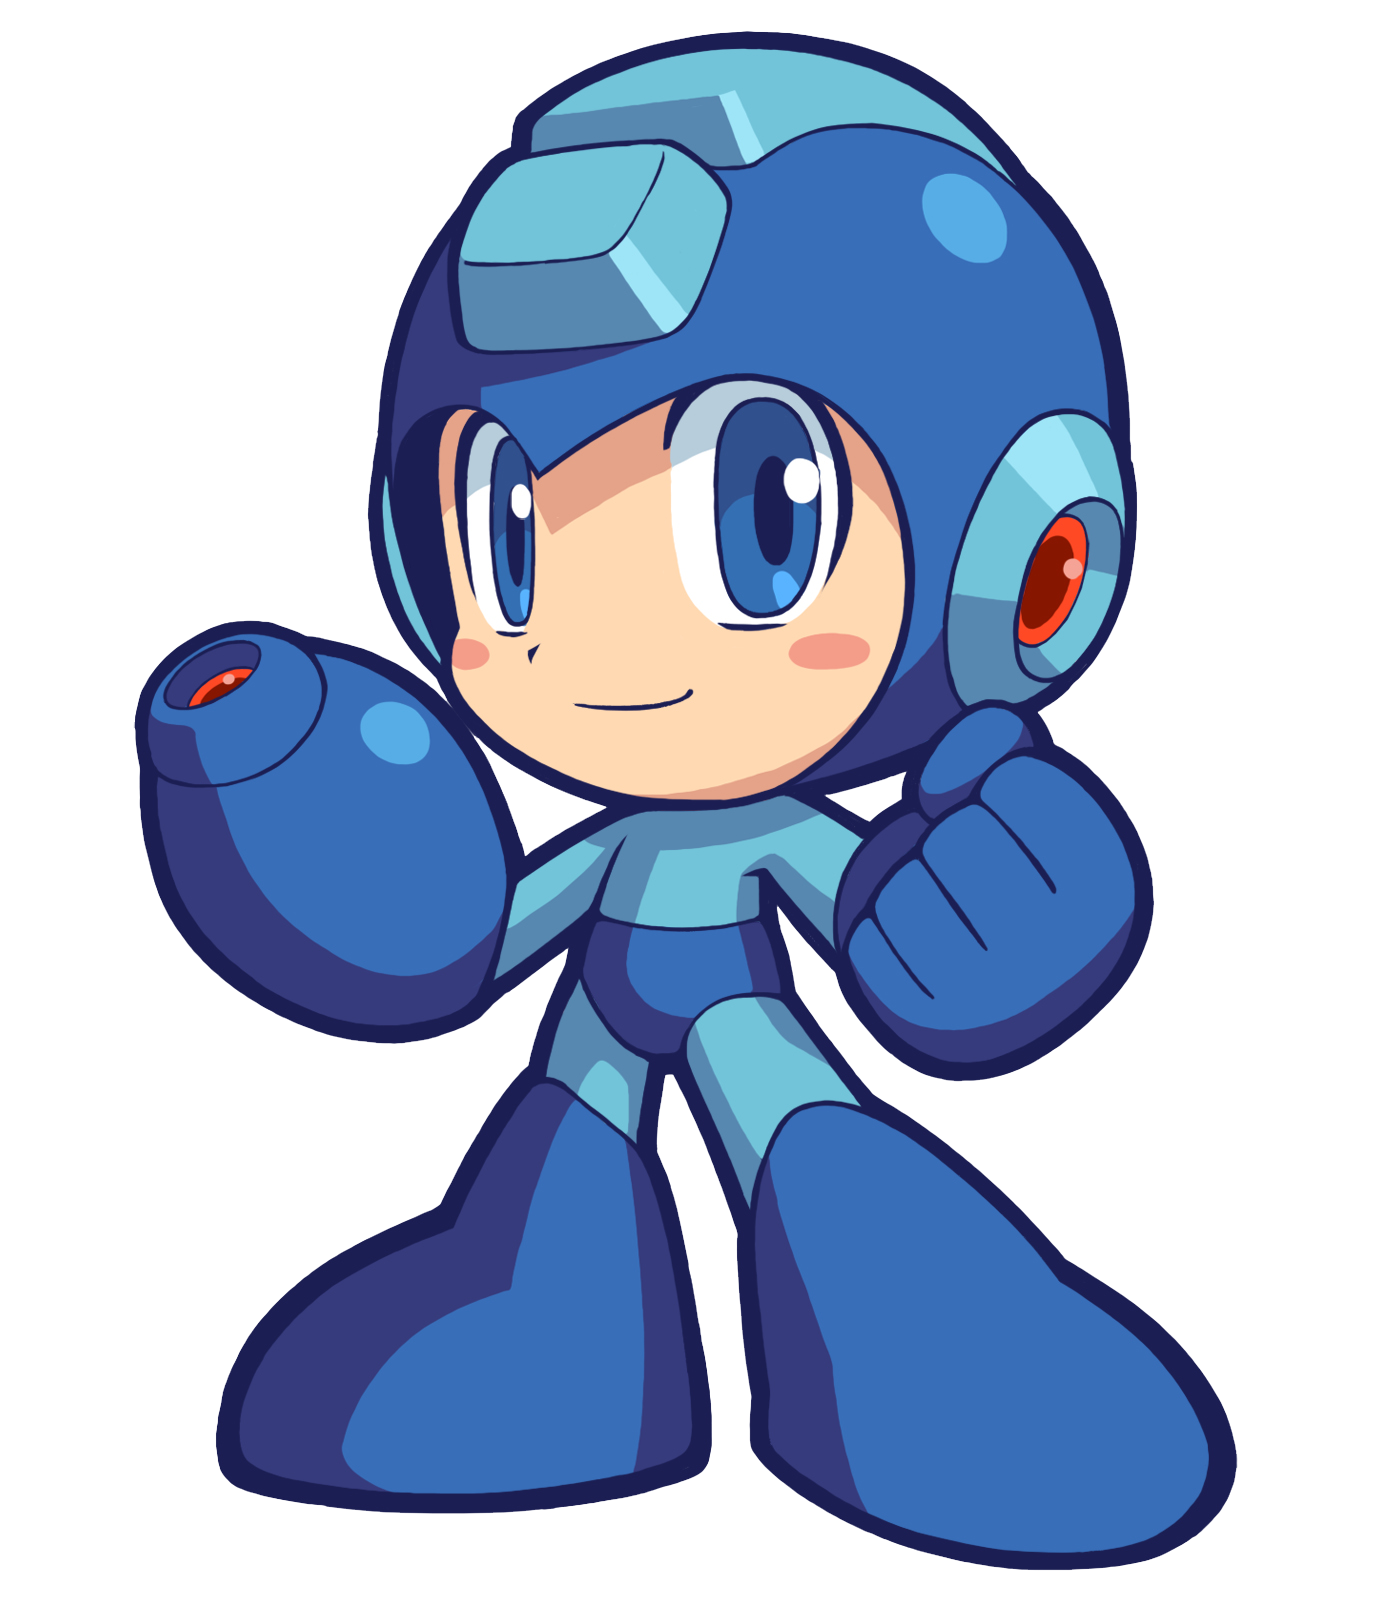 Mega Man PNG Image Transparen